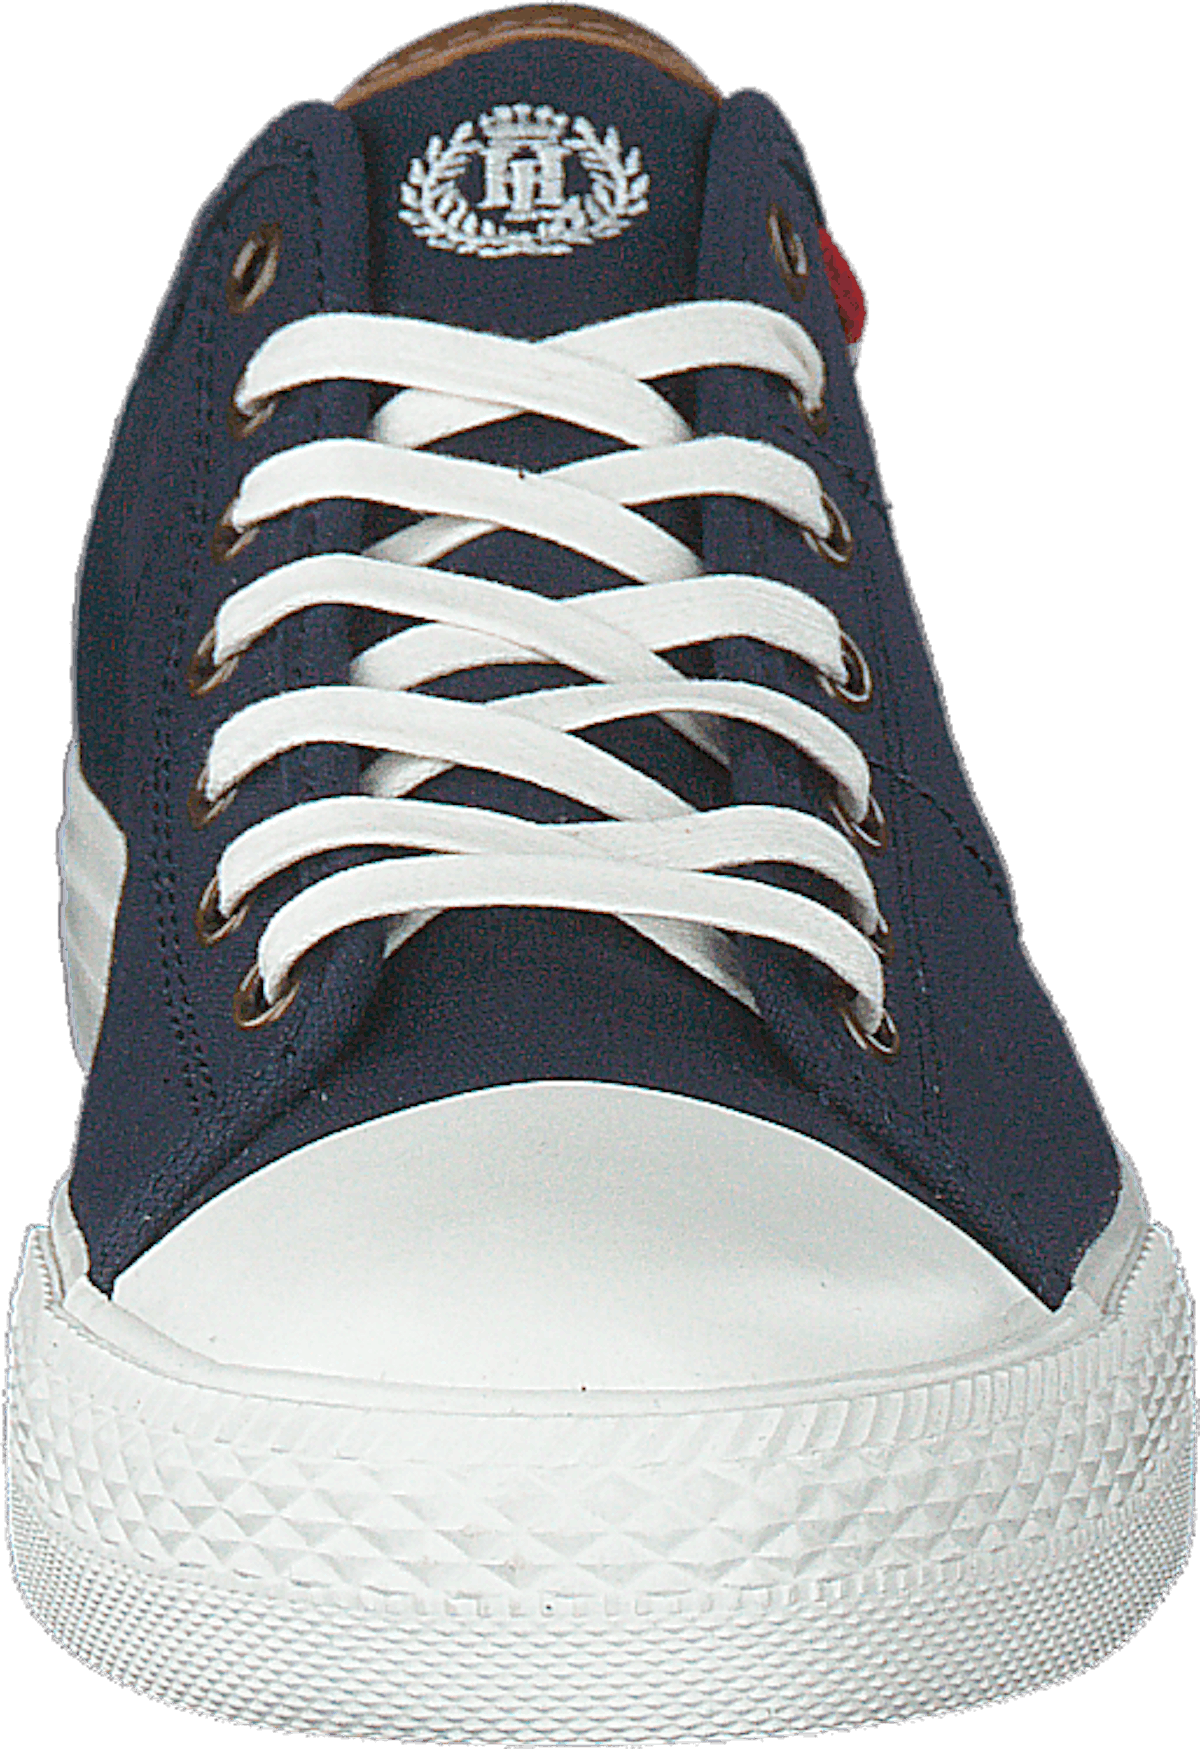 Bromley Sneaker Navy